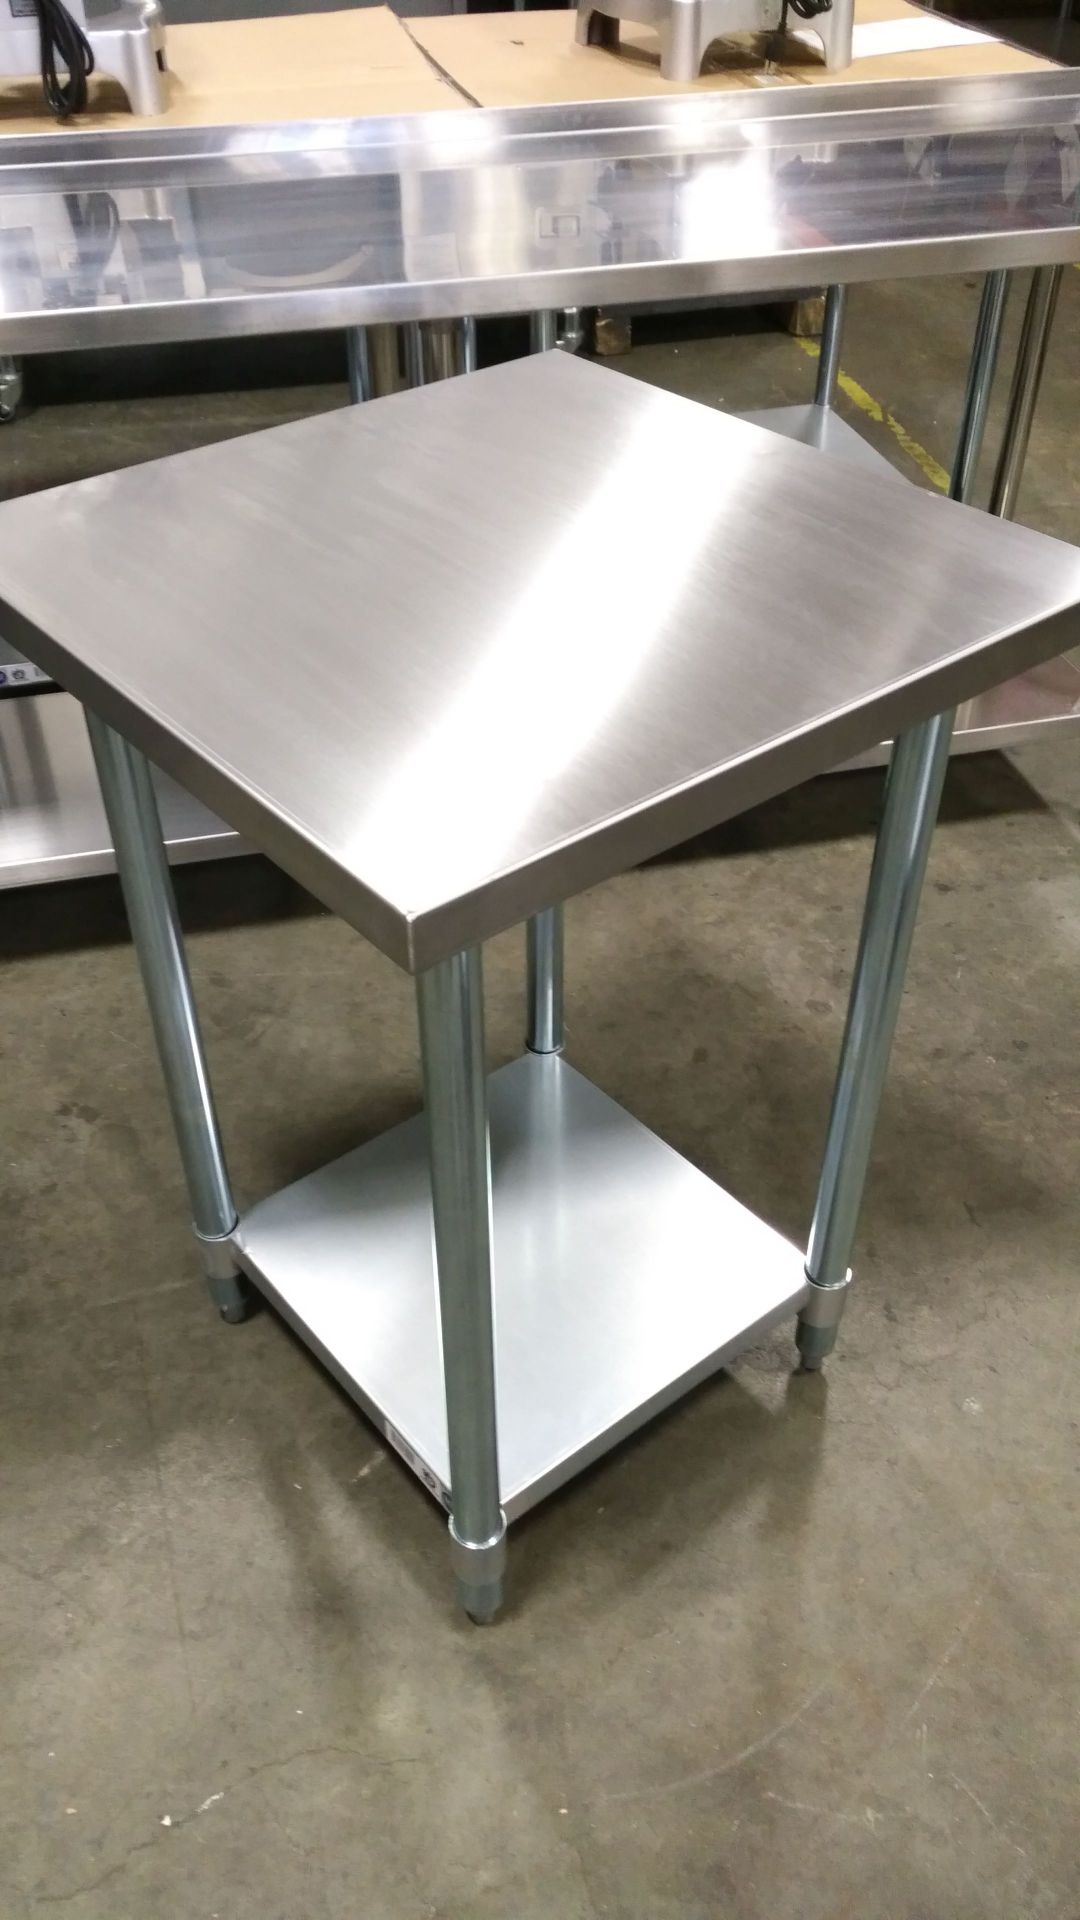 24" x 24" Stainless Steel Work Table, Galvanized Undershelf - Image 2 of 2